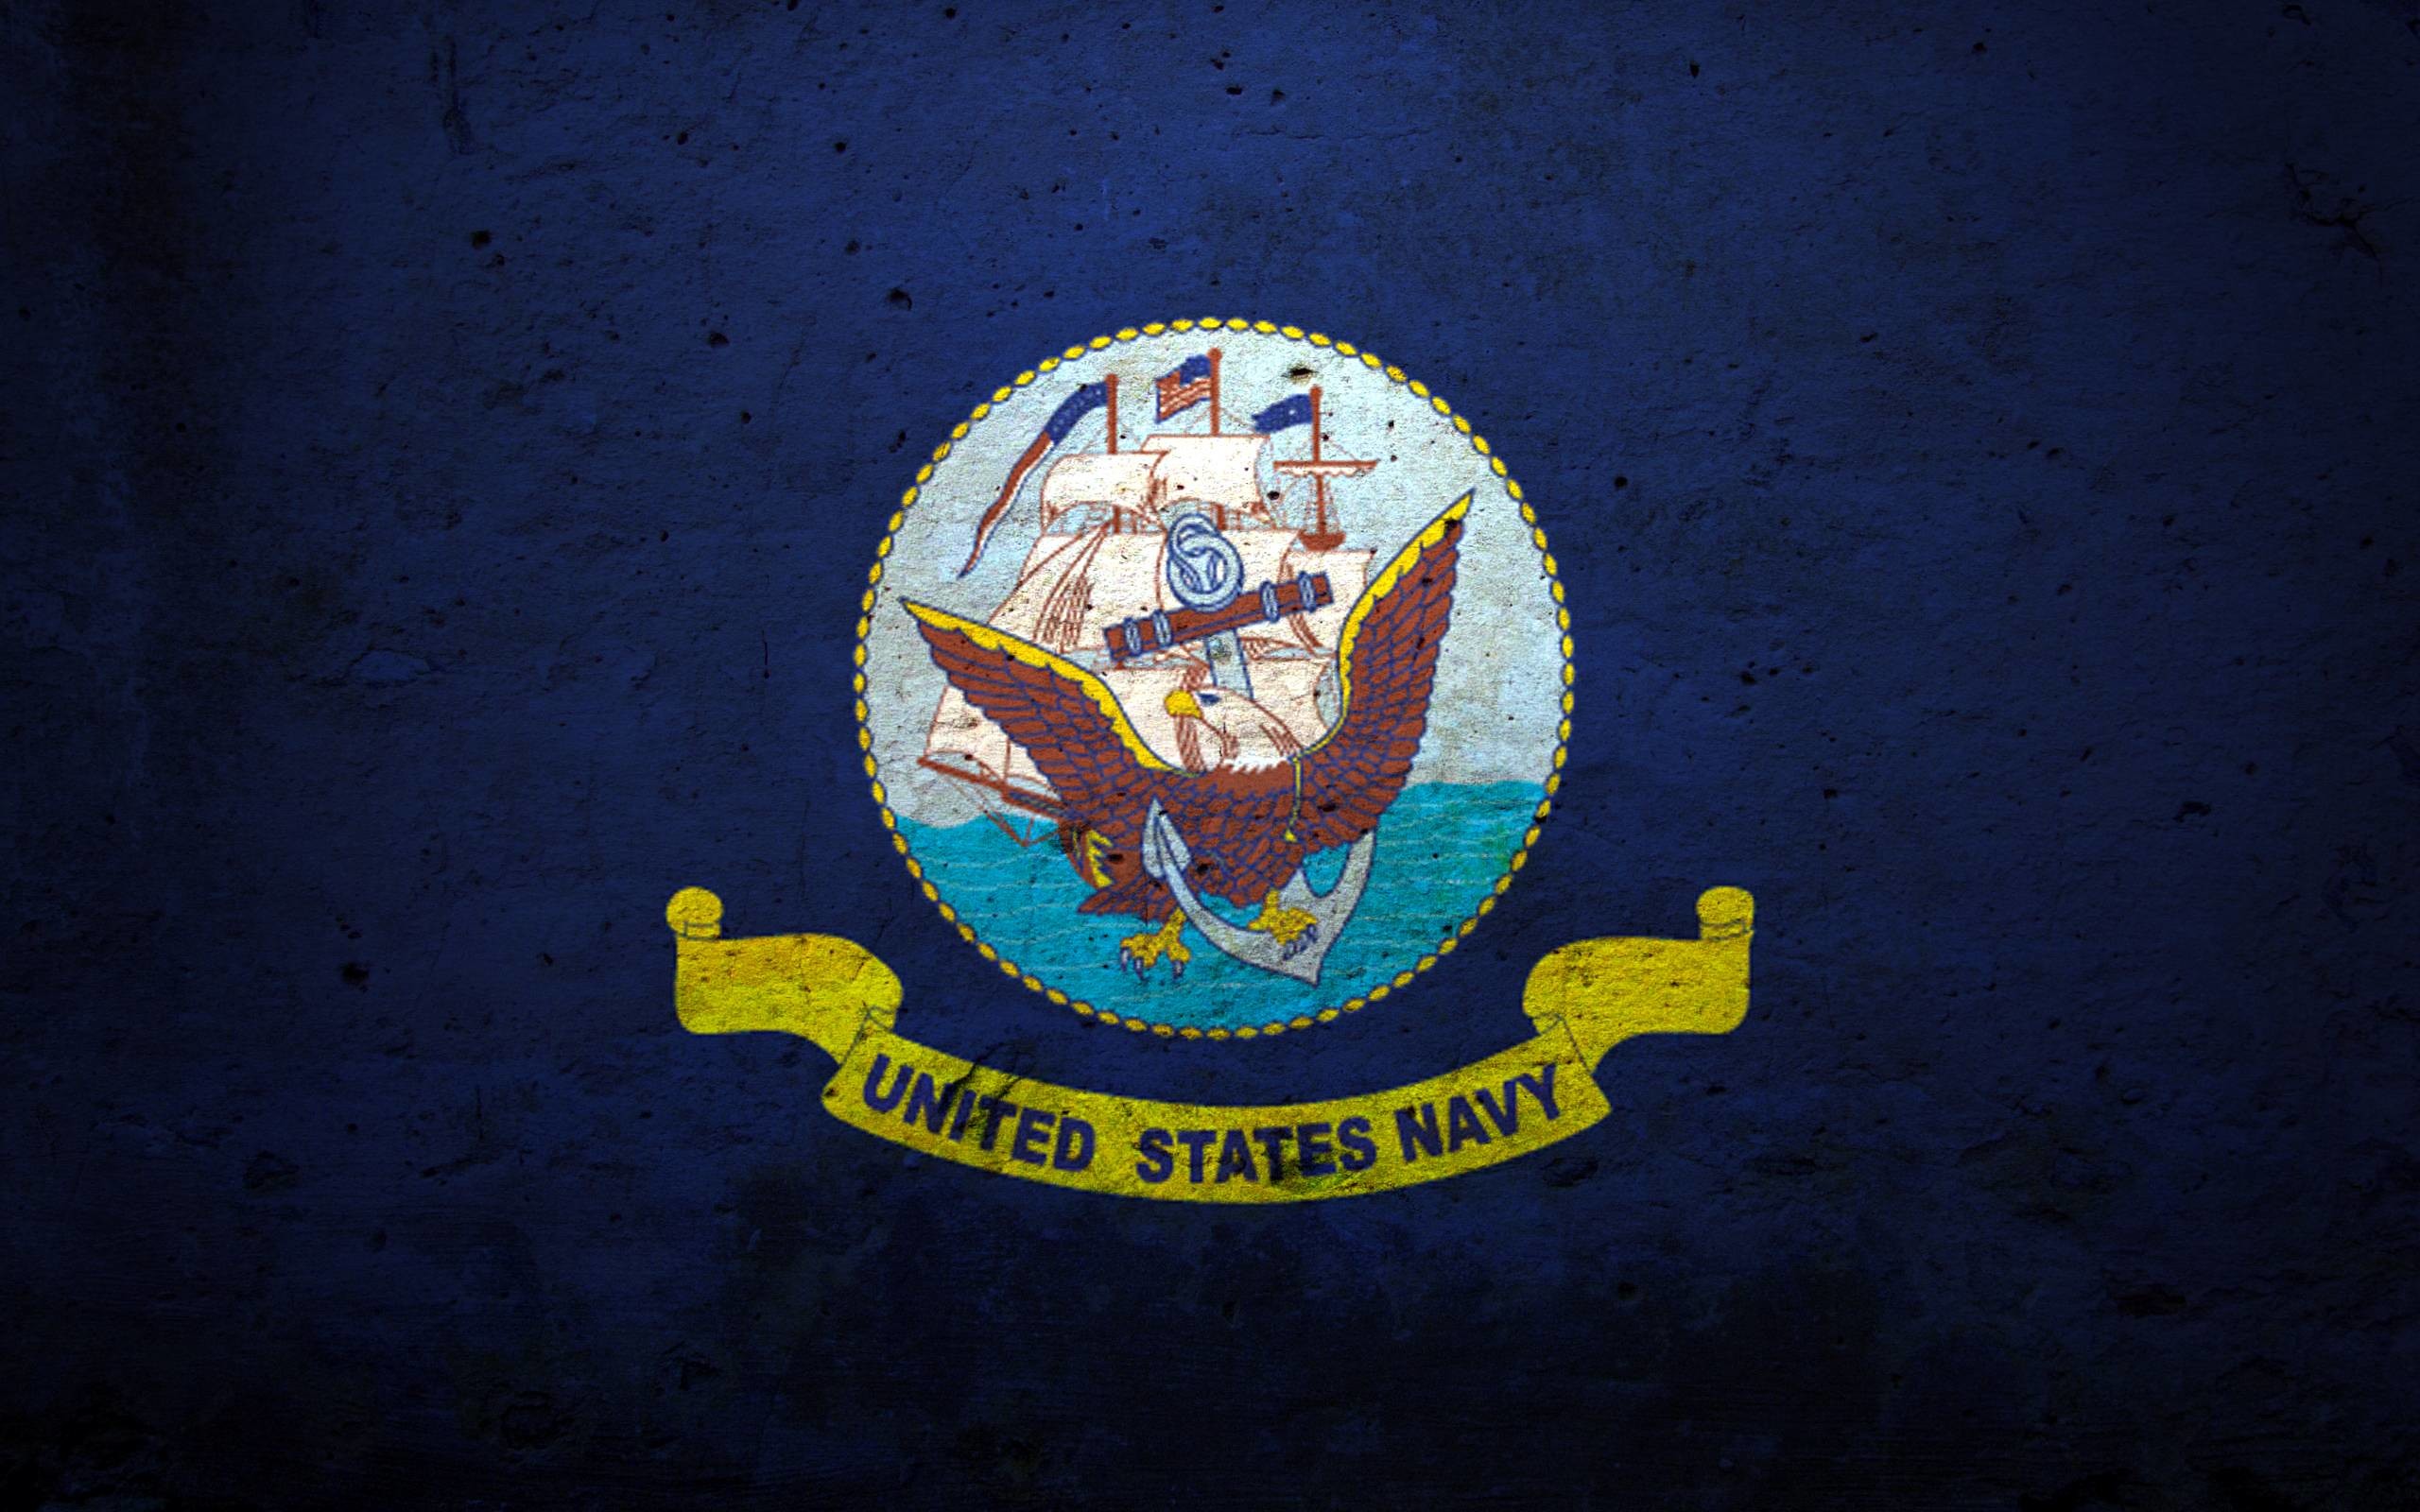 Navy Phone Wallpaper